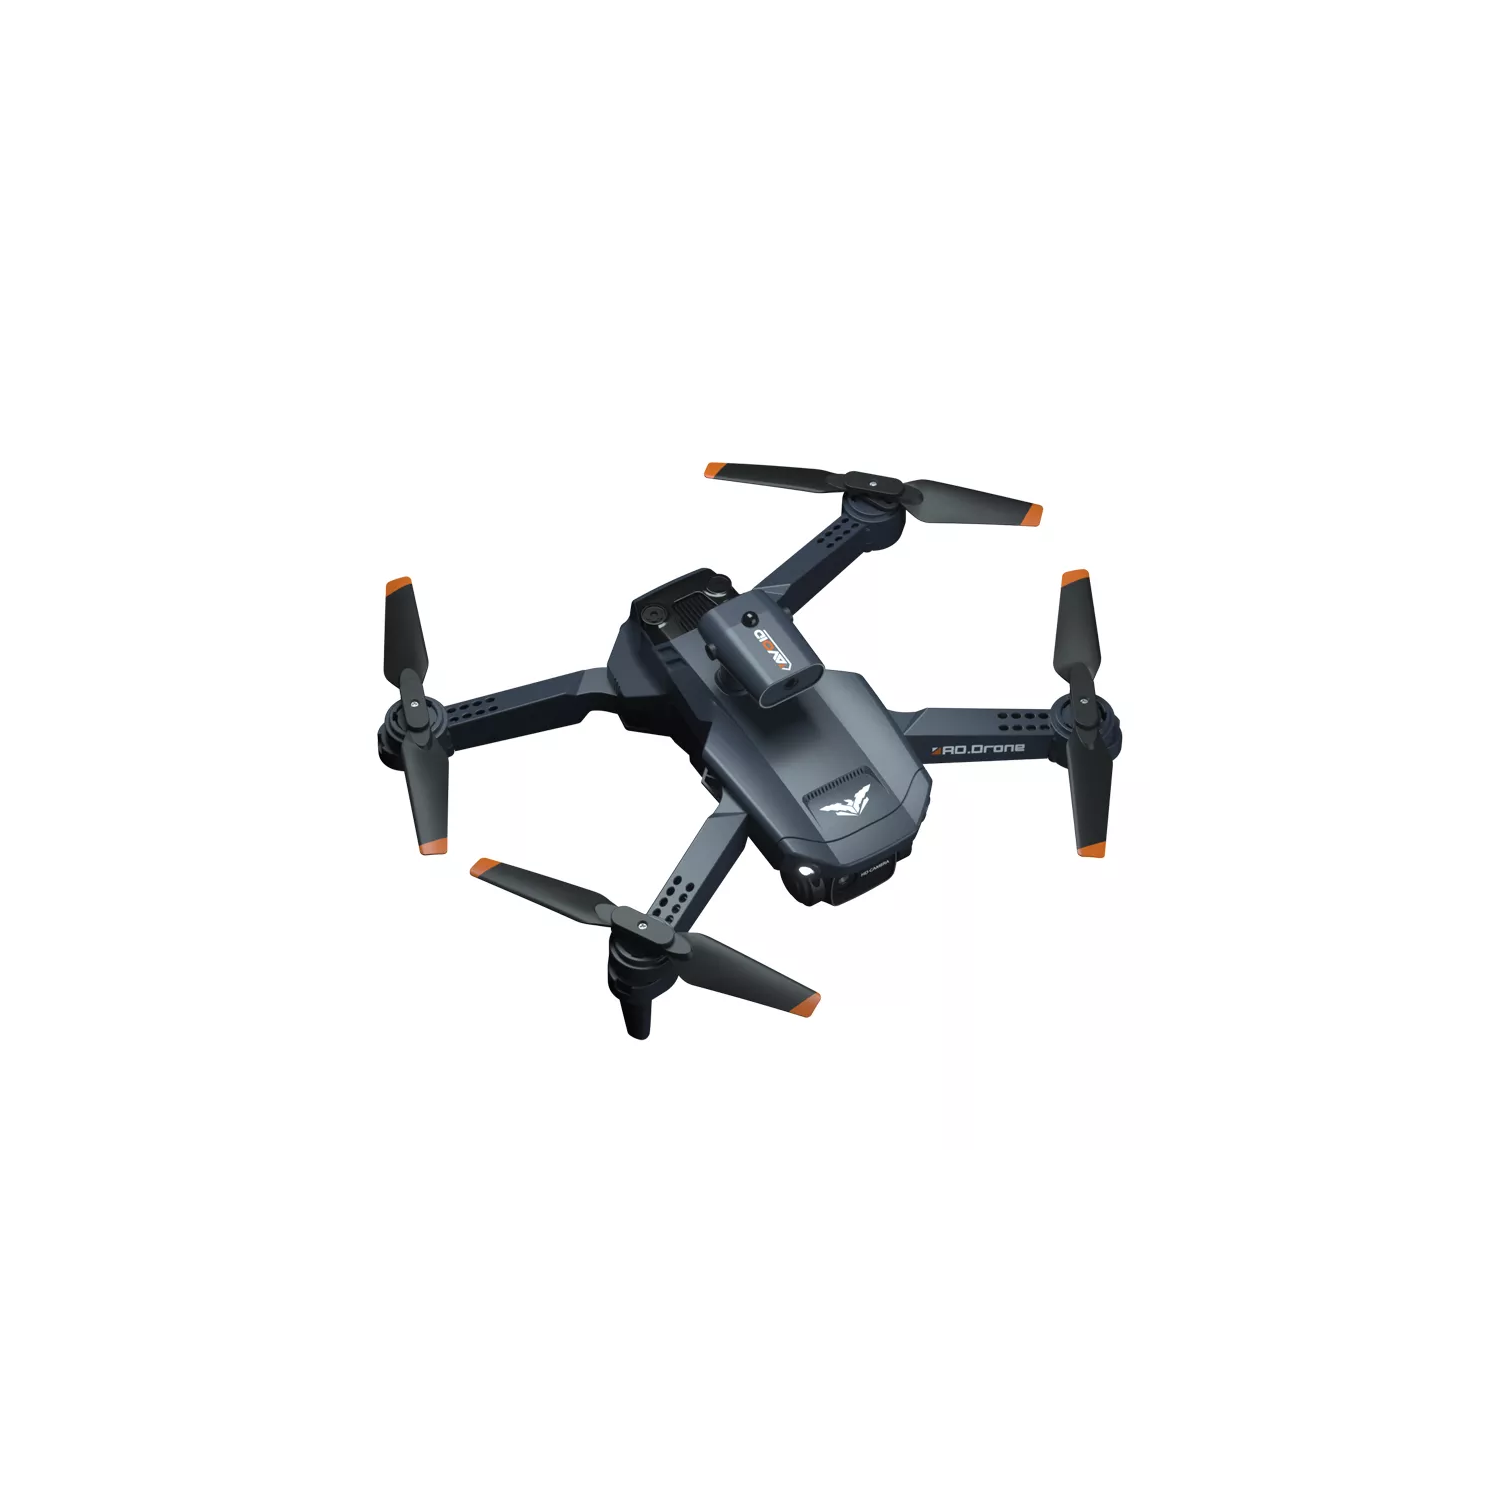 ISPEKTRUM RTH106 Drone 4K Dual Camera, 360 Obstacle Avoidance, Advanced Auto Return, Trajectory Flight, Smart Hover, 2 Level Flight Speed, Gesture Photo